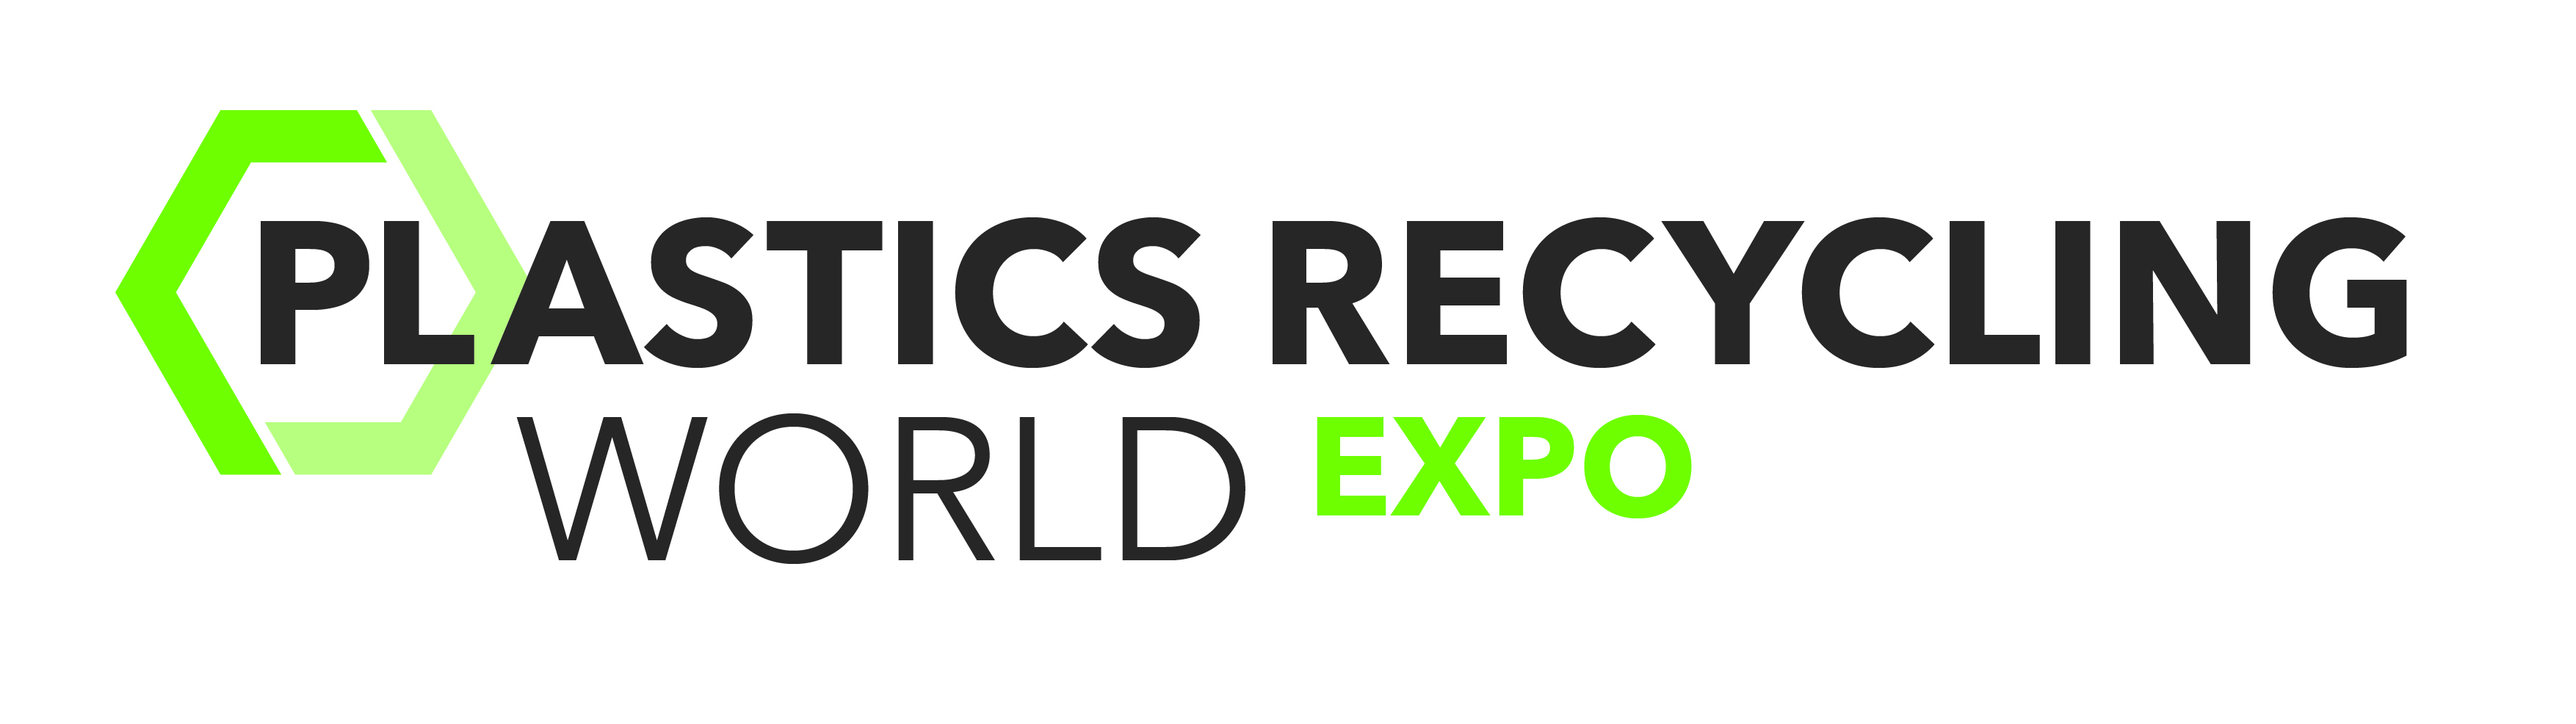 Plastics Recycling World Expo logo